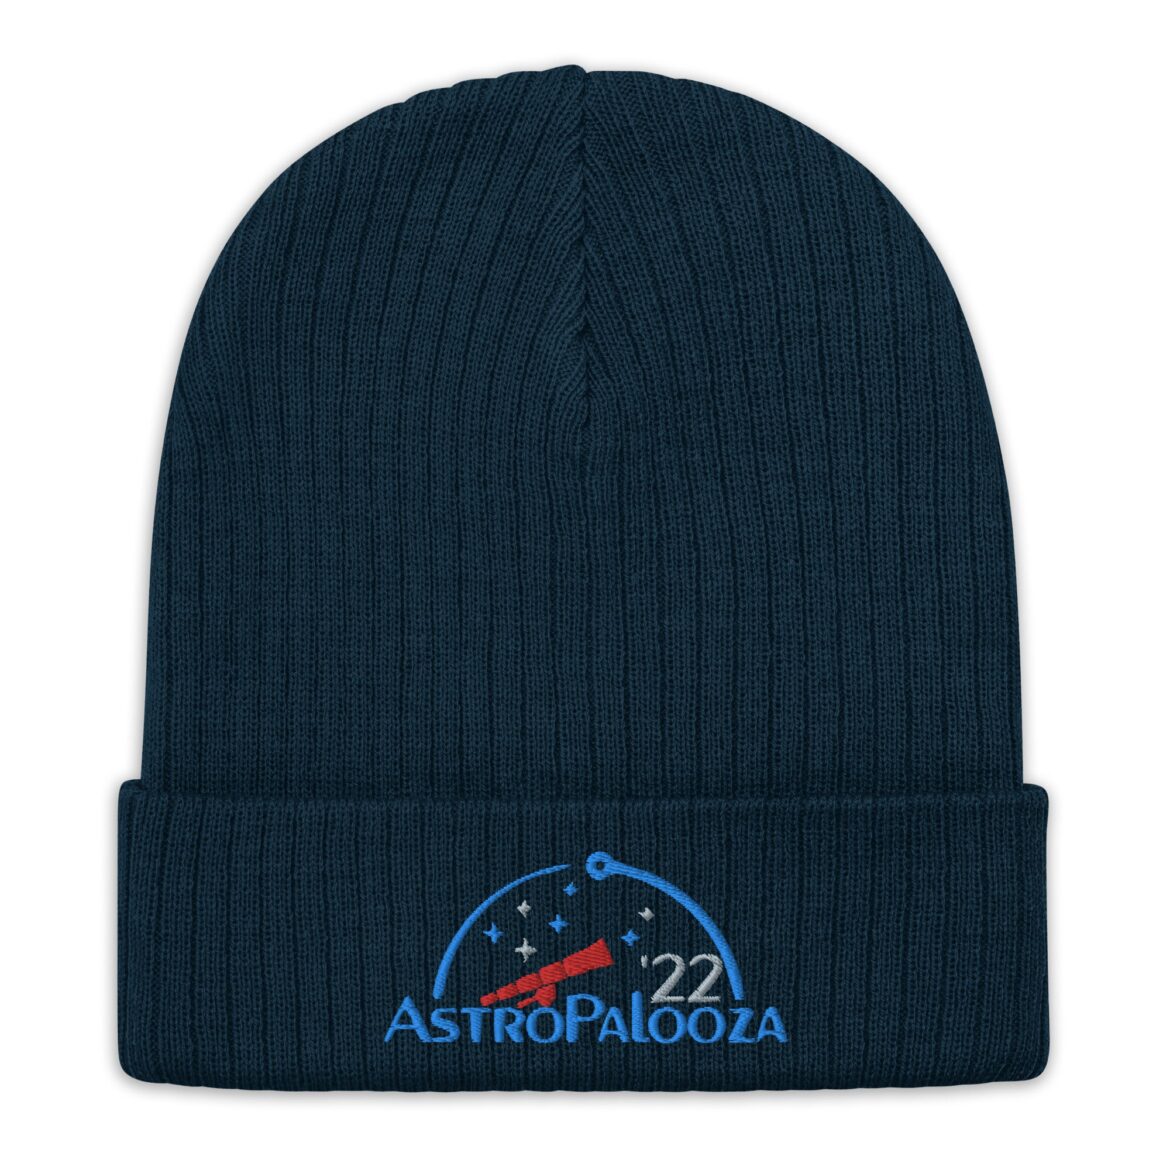 AstroPalooza ’22 Ribbed Knit Beanie